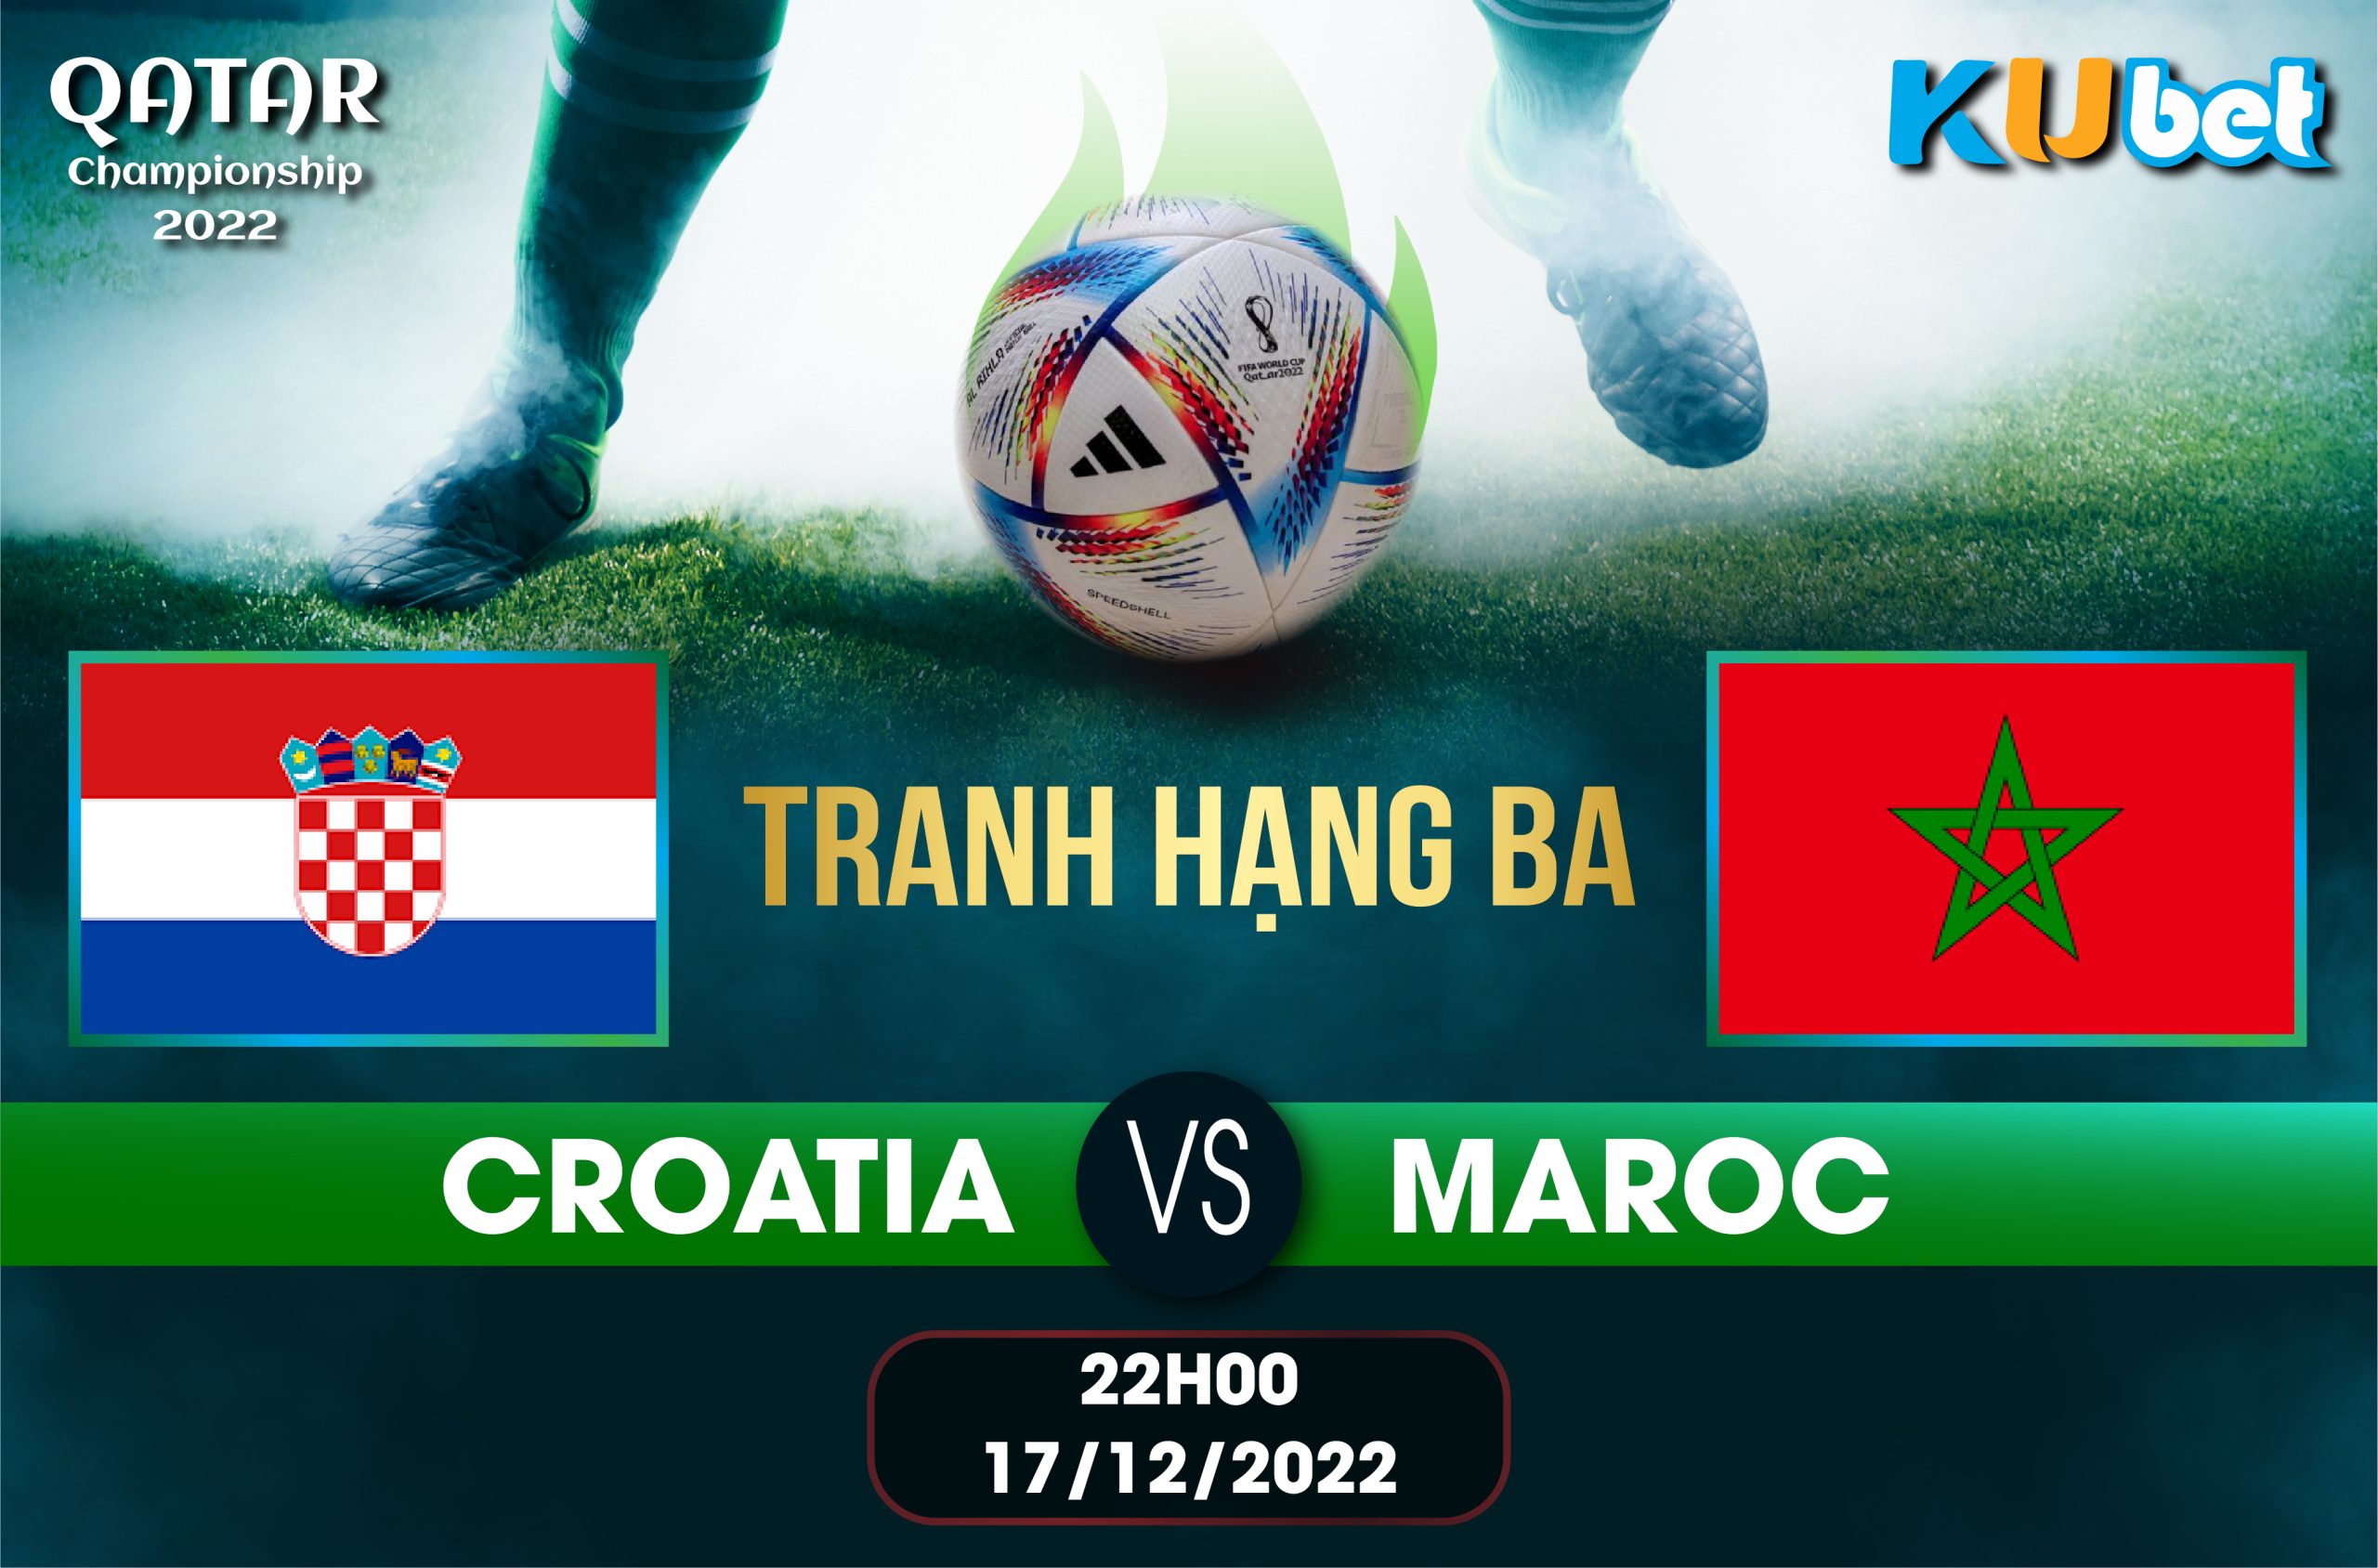 CROATIA VS MAROC 22H00 NGÀY 17/12 :